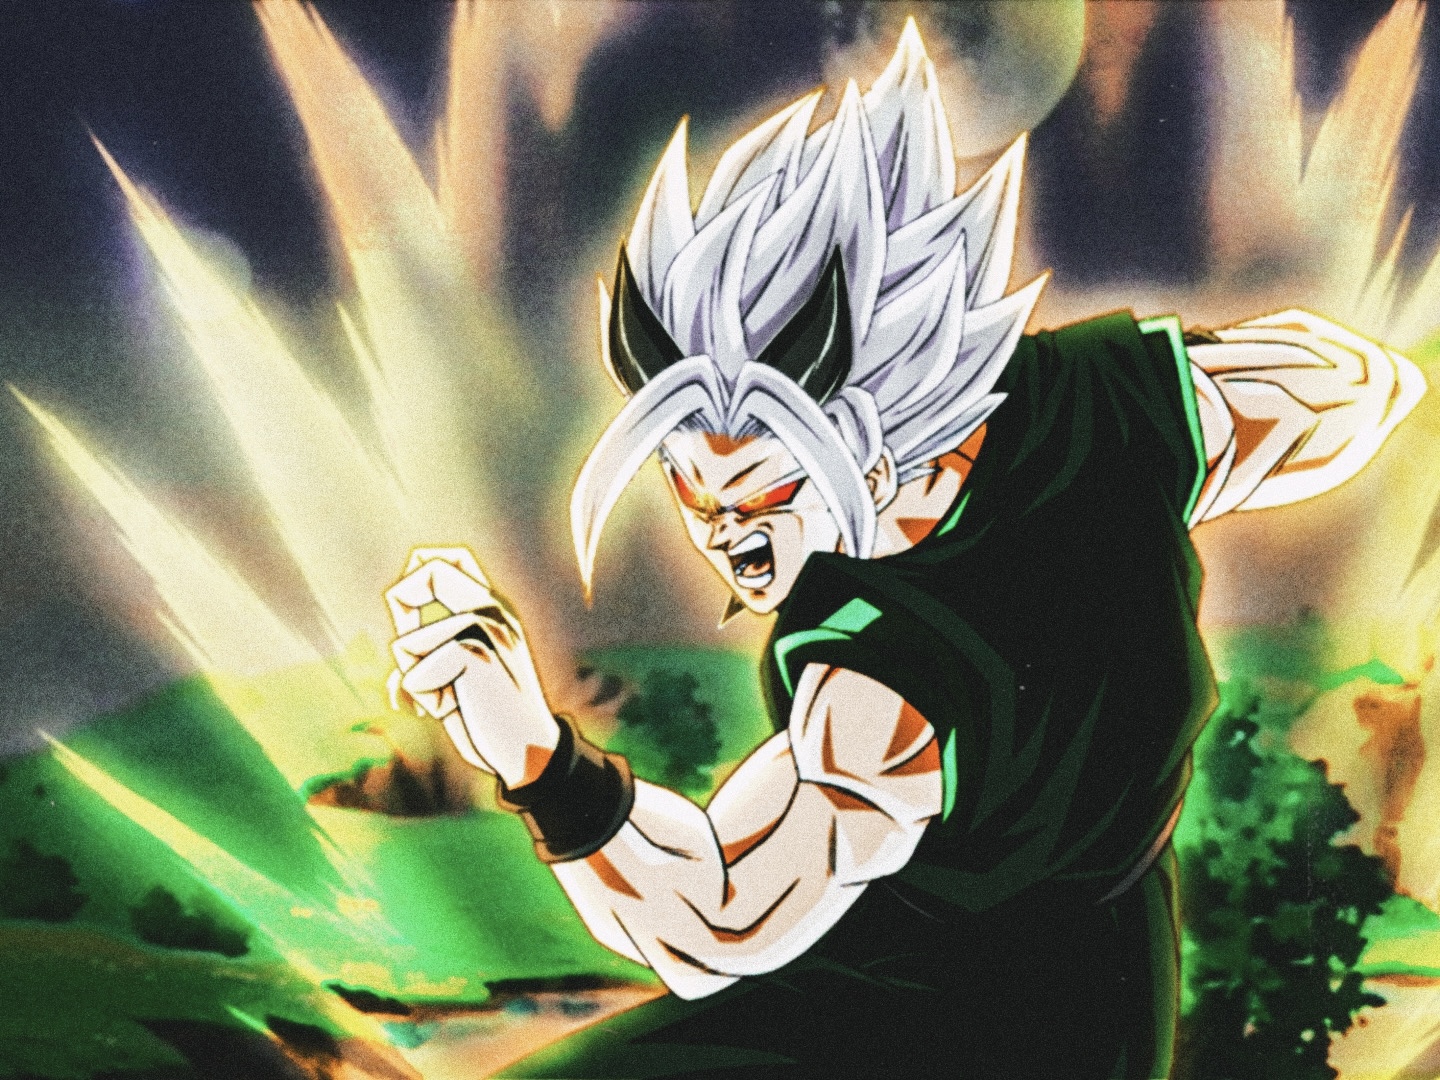 Goku Super Saiyajin 14 (Dragon Ball AF) by Maxuelzombie on DeviantArt